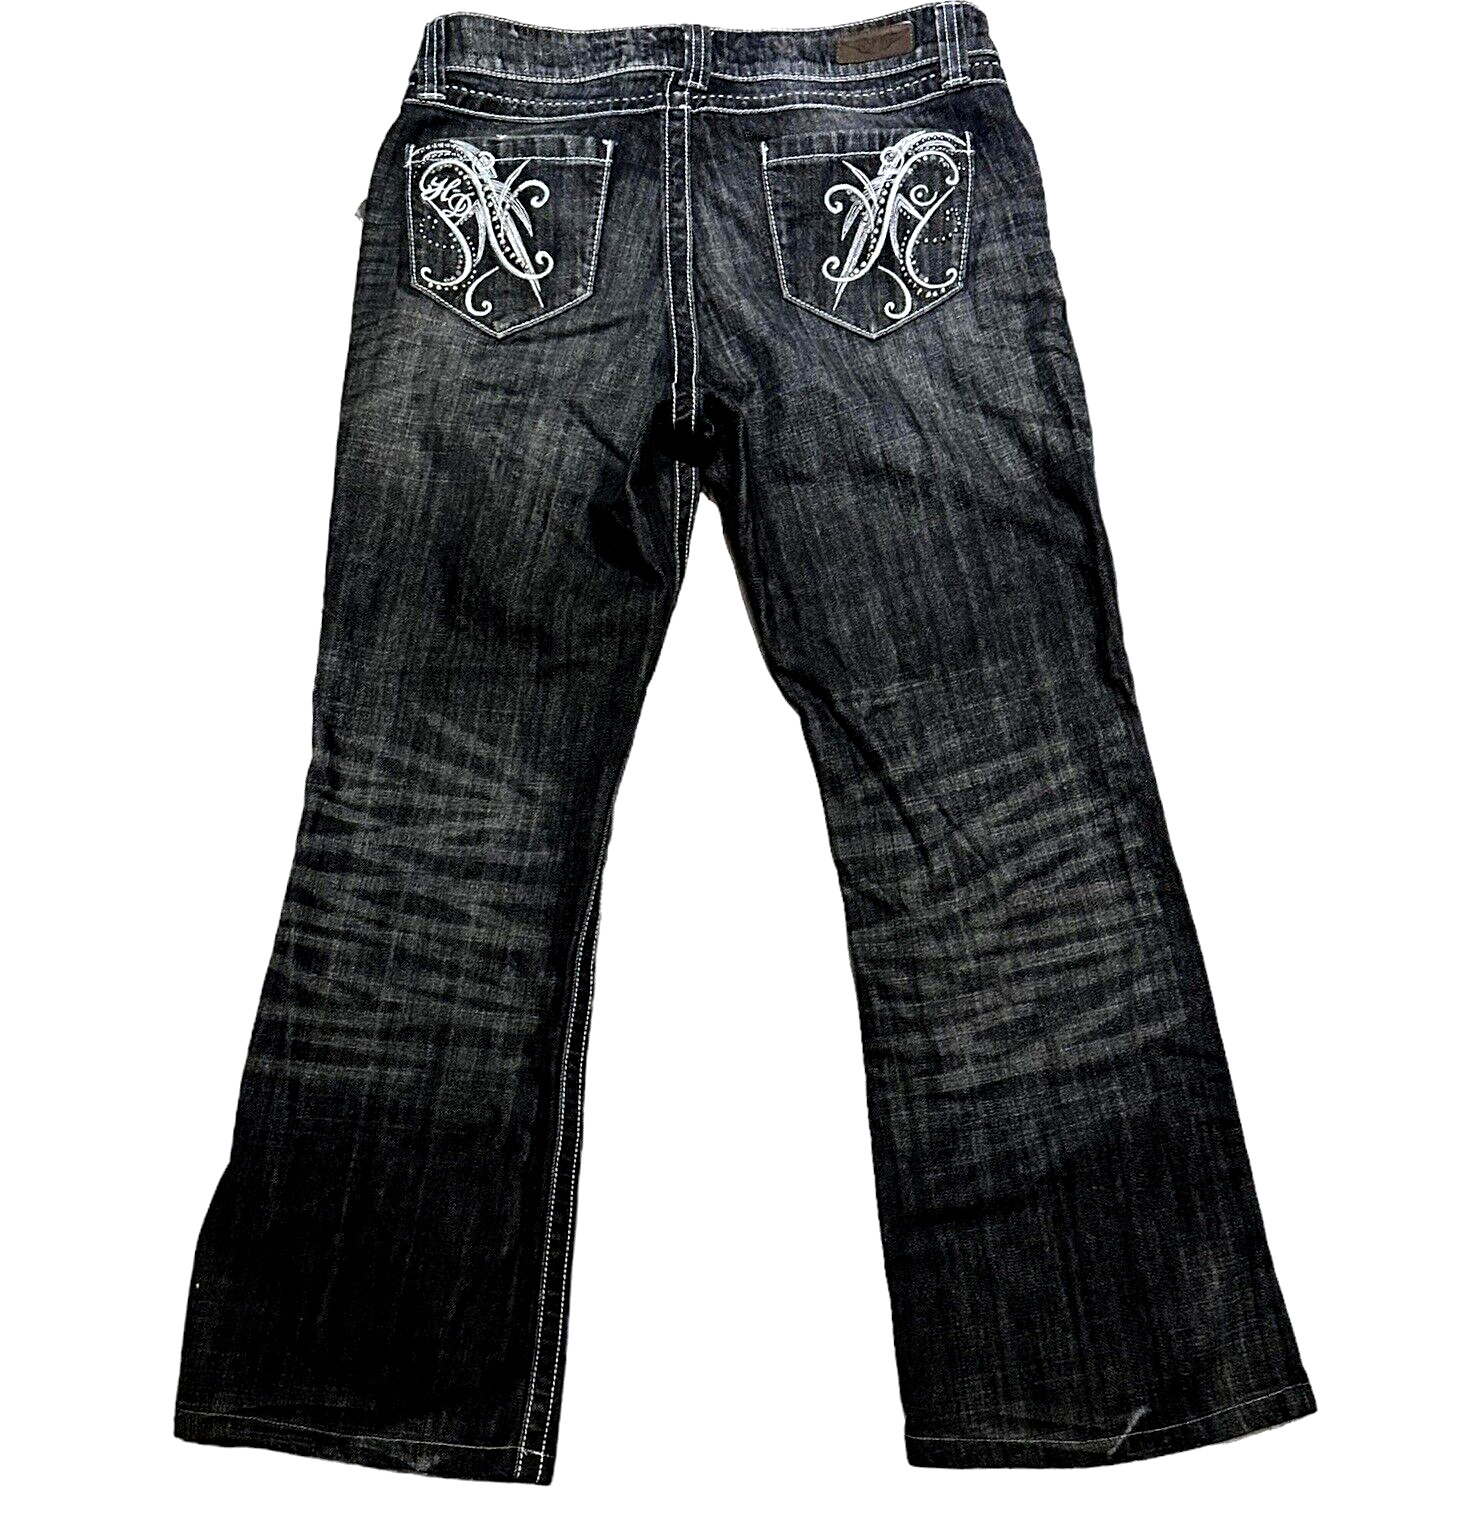 HARLEY DAVIDSON Bootleg Jeans Womens Size 12 Med Black Wash Denim Rhinestones